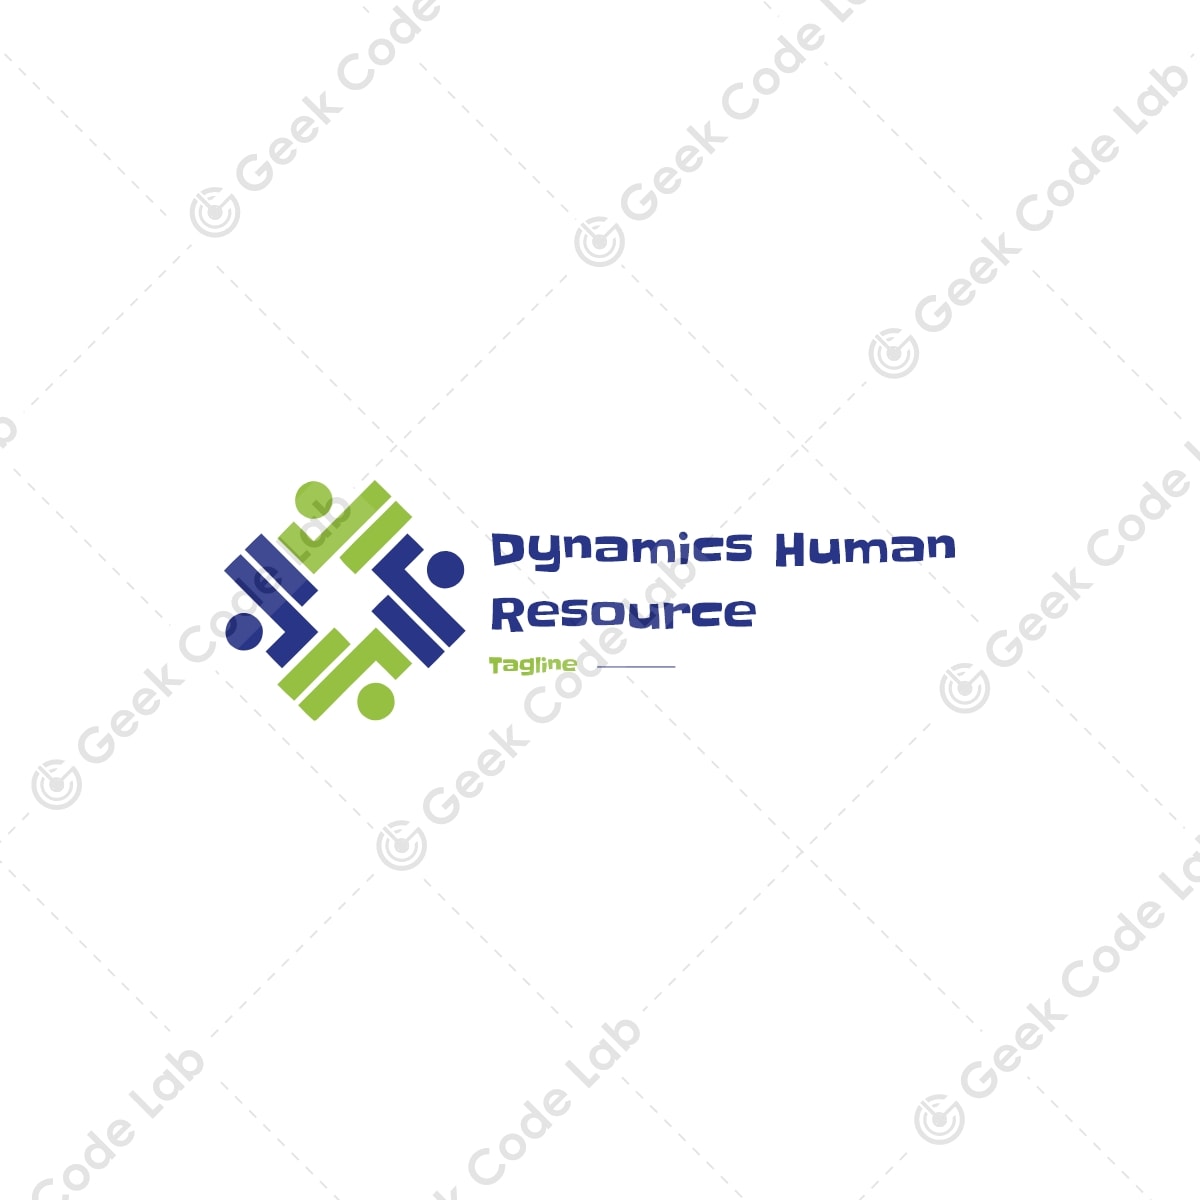 Dynamics Human Resource